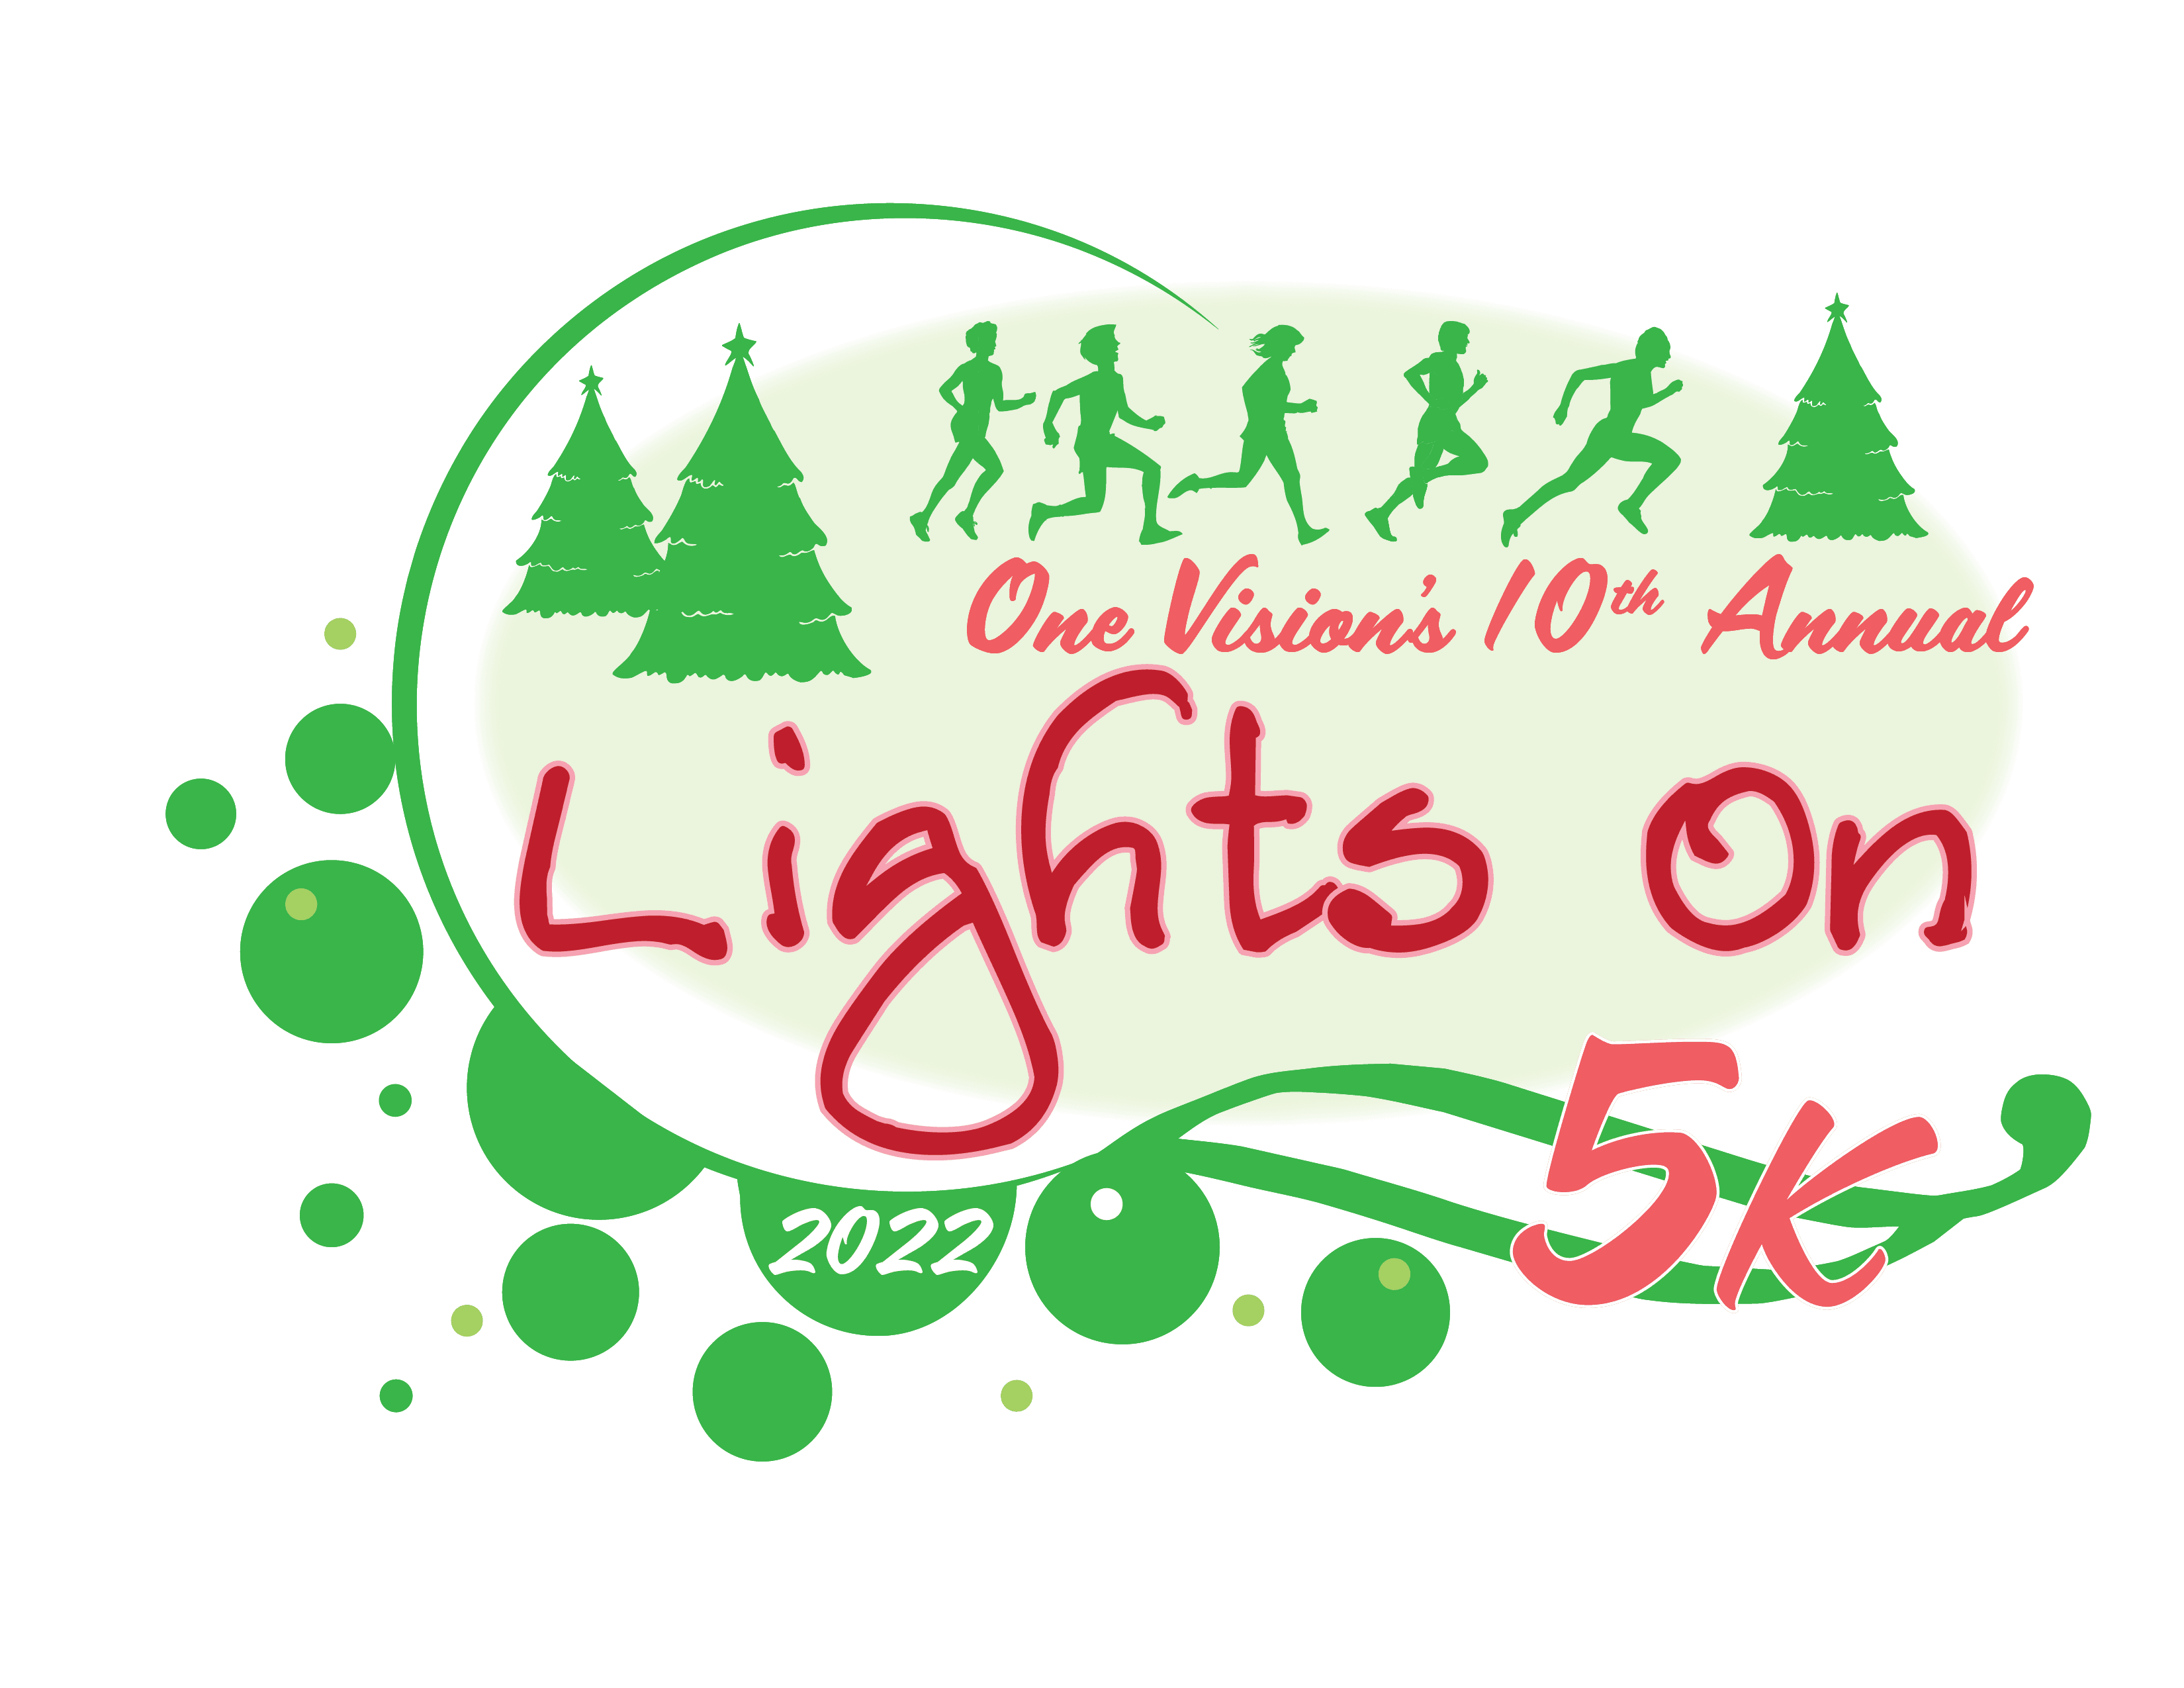 Help us celebrate 10 YEARS of Lights On 5K!